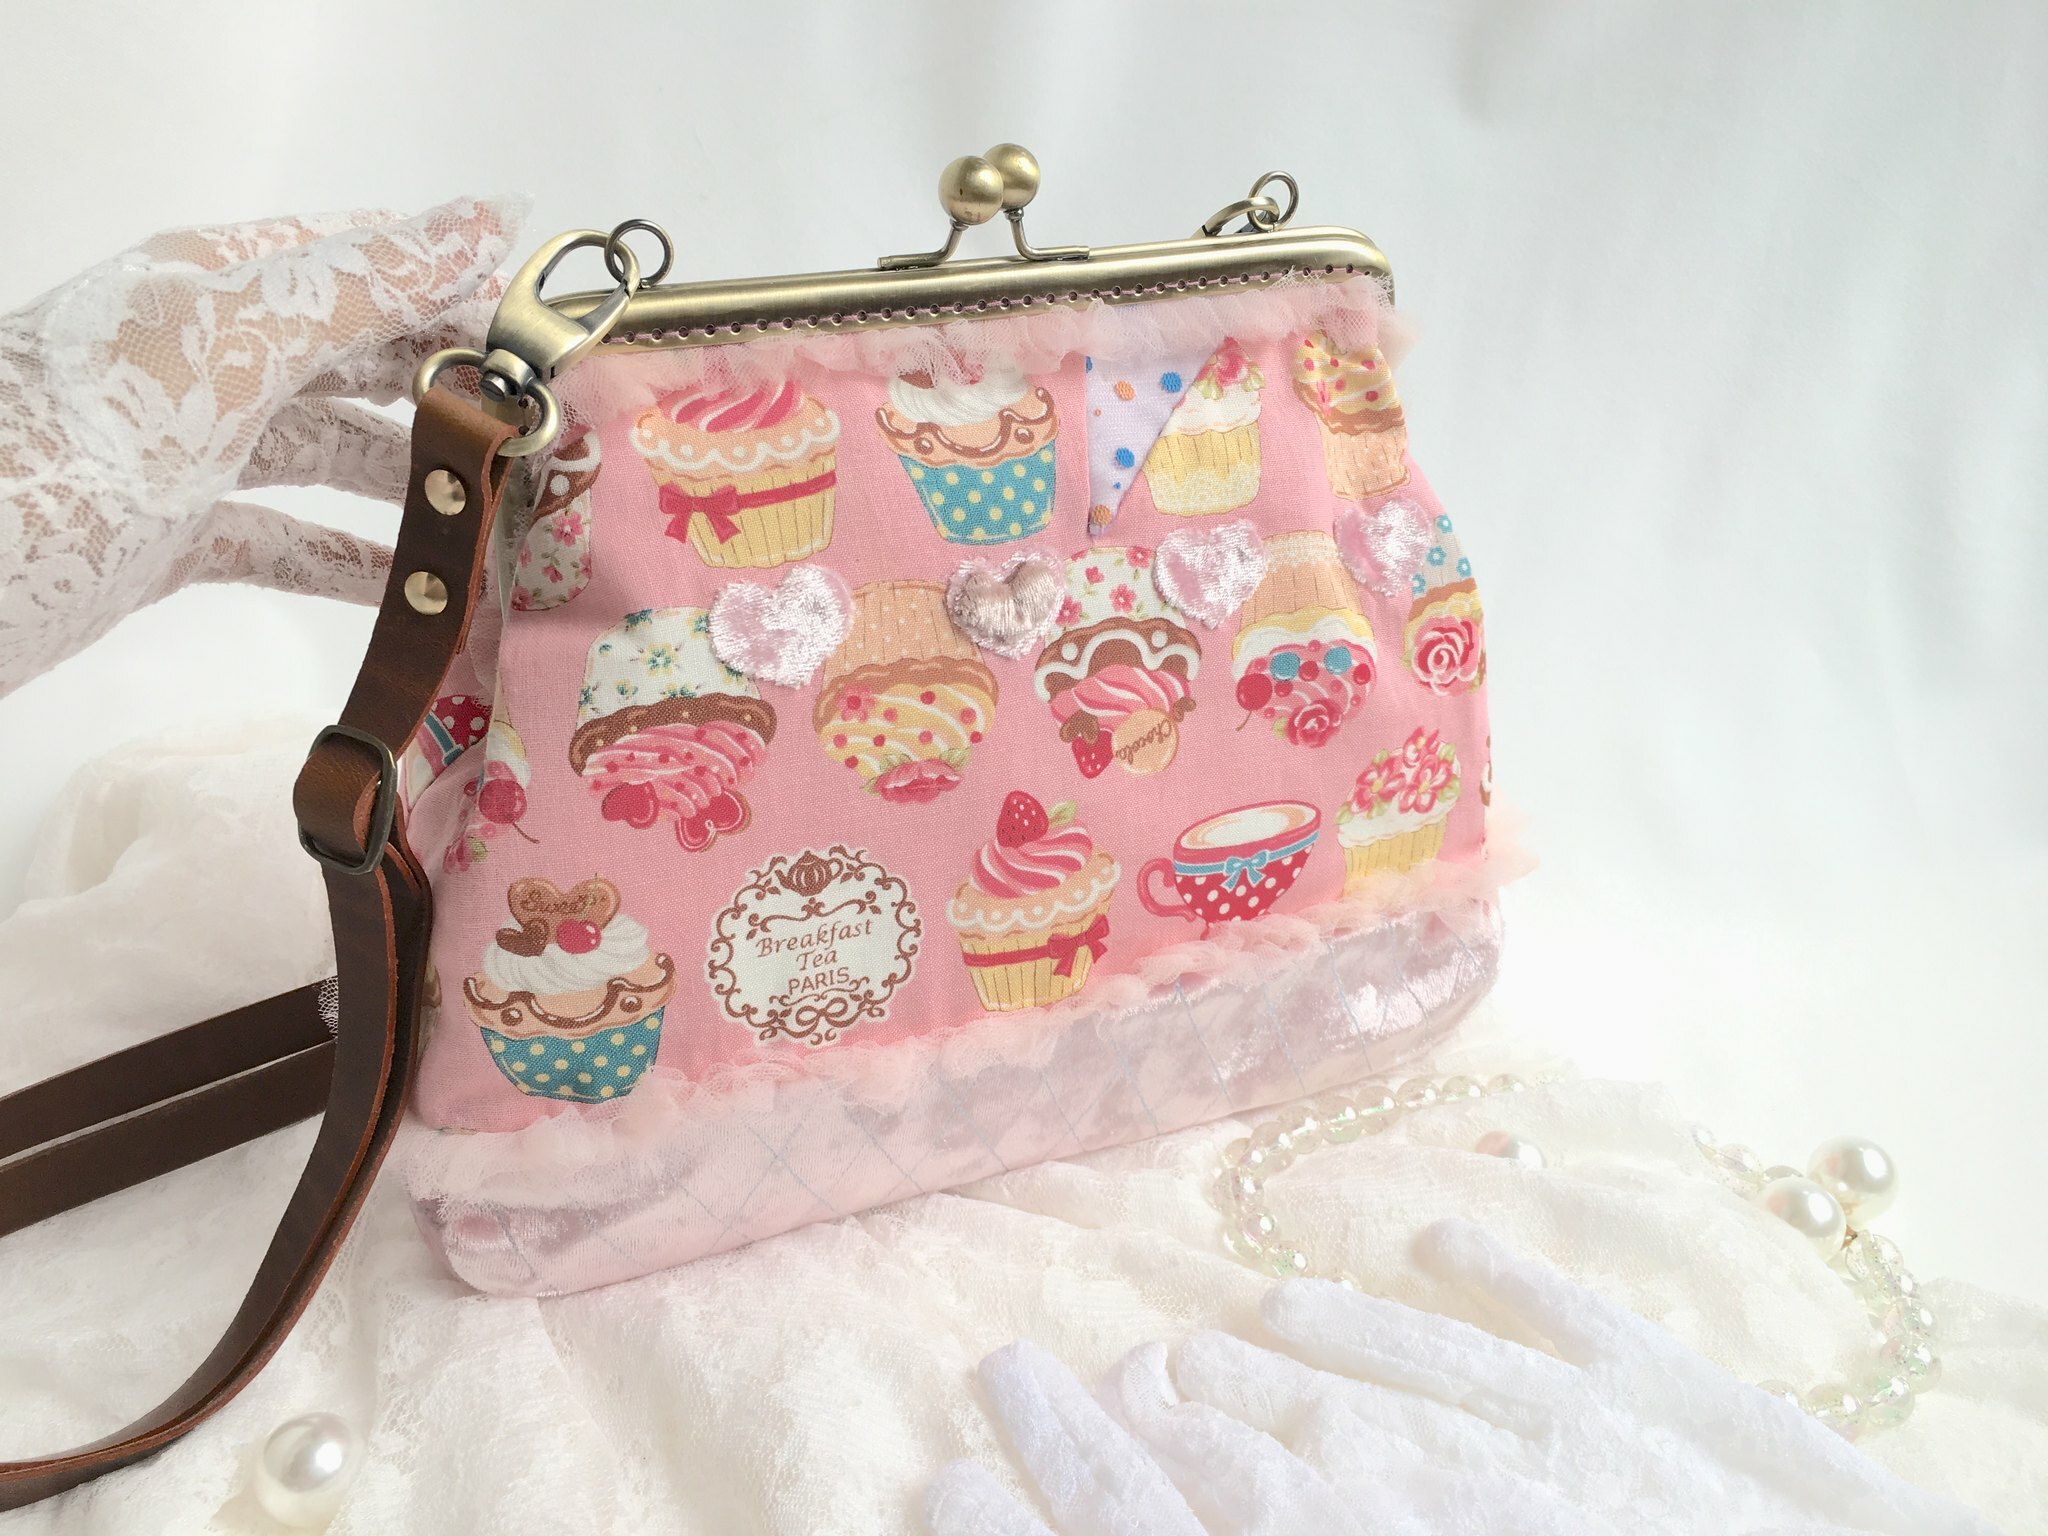 風后妃設計口金包粉色可愛包包gamaguchi pink stuff kisslock bag handmade